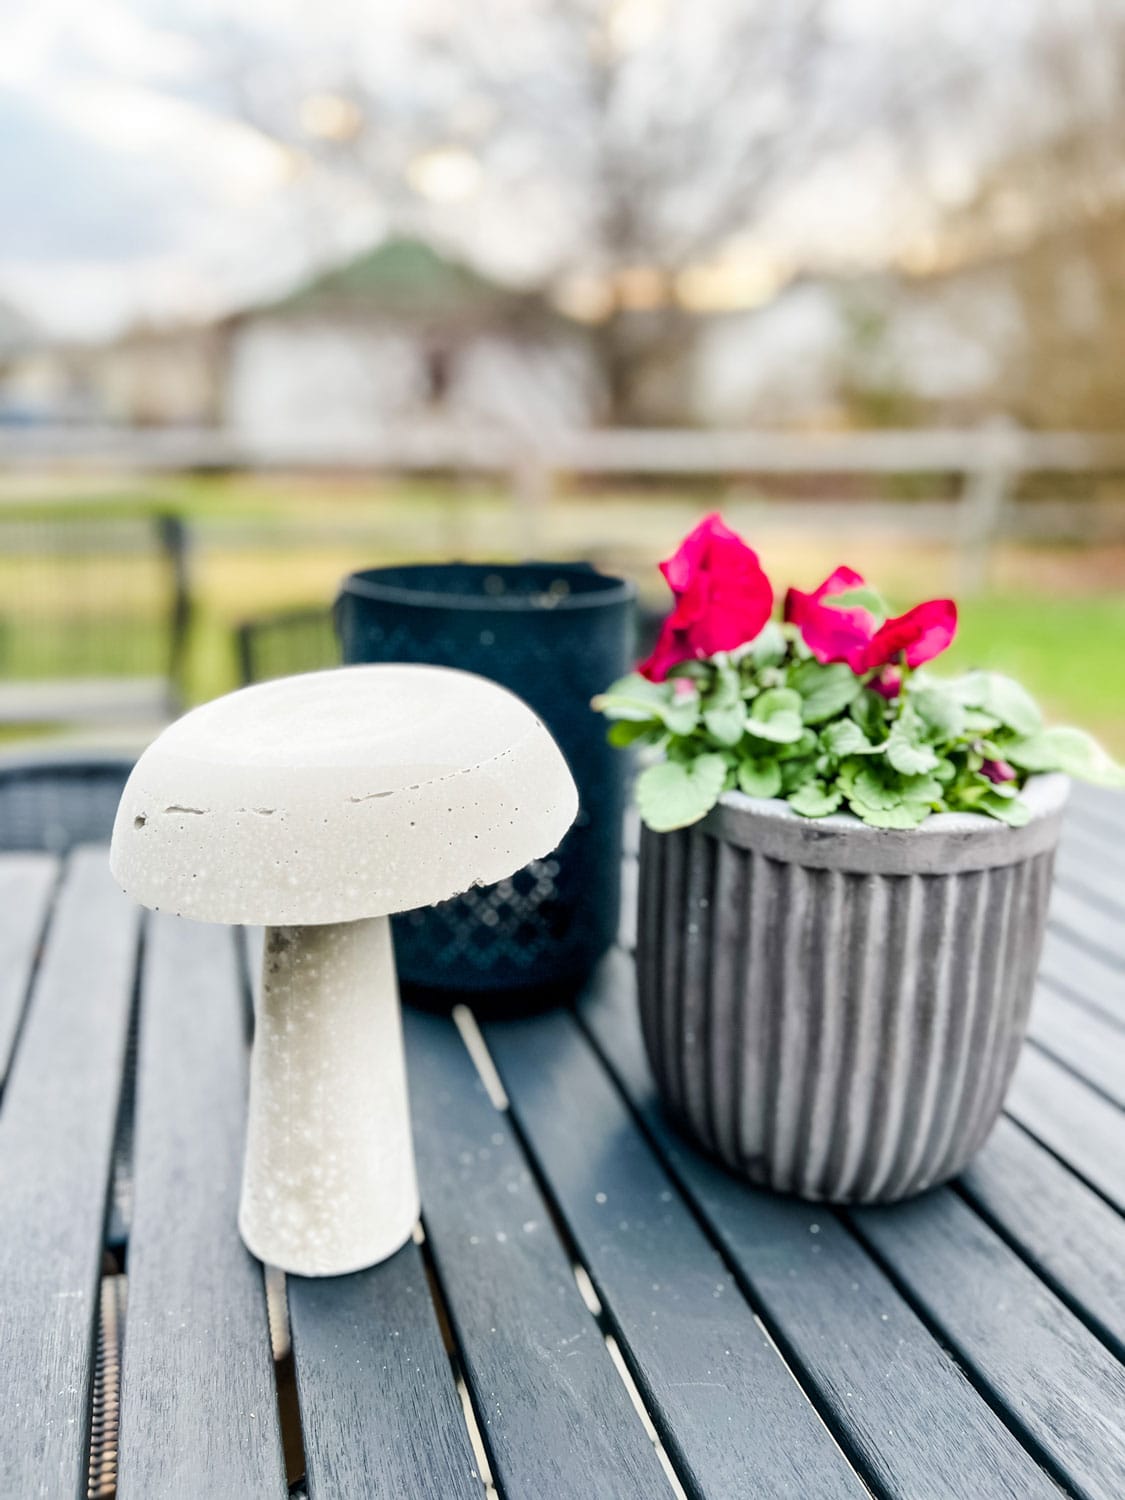 How to Make Easy Concrete Mushrooms